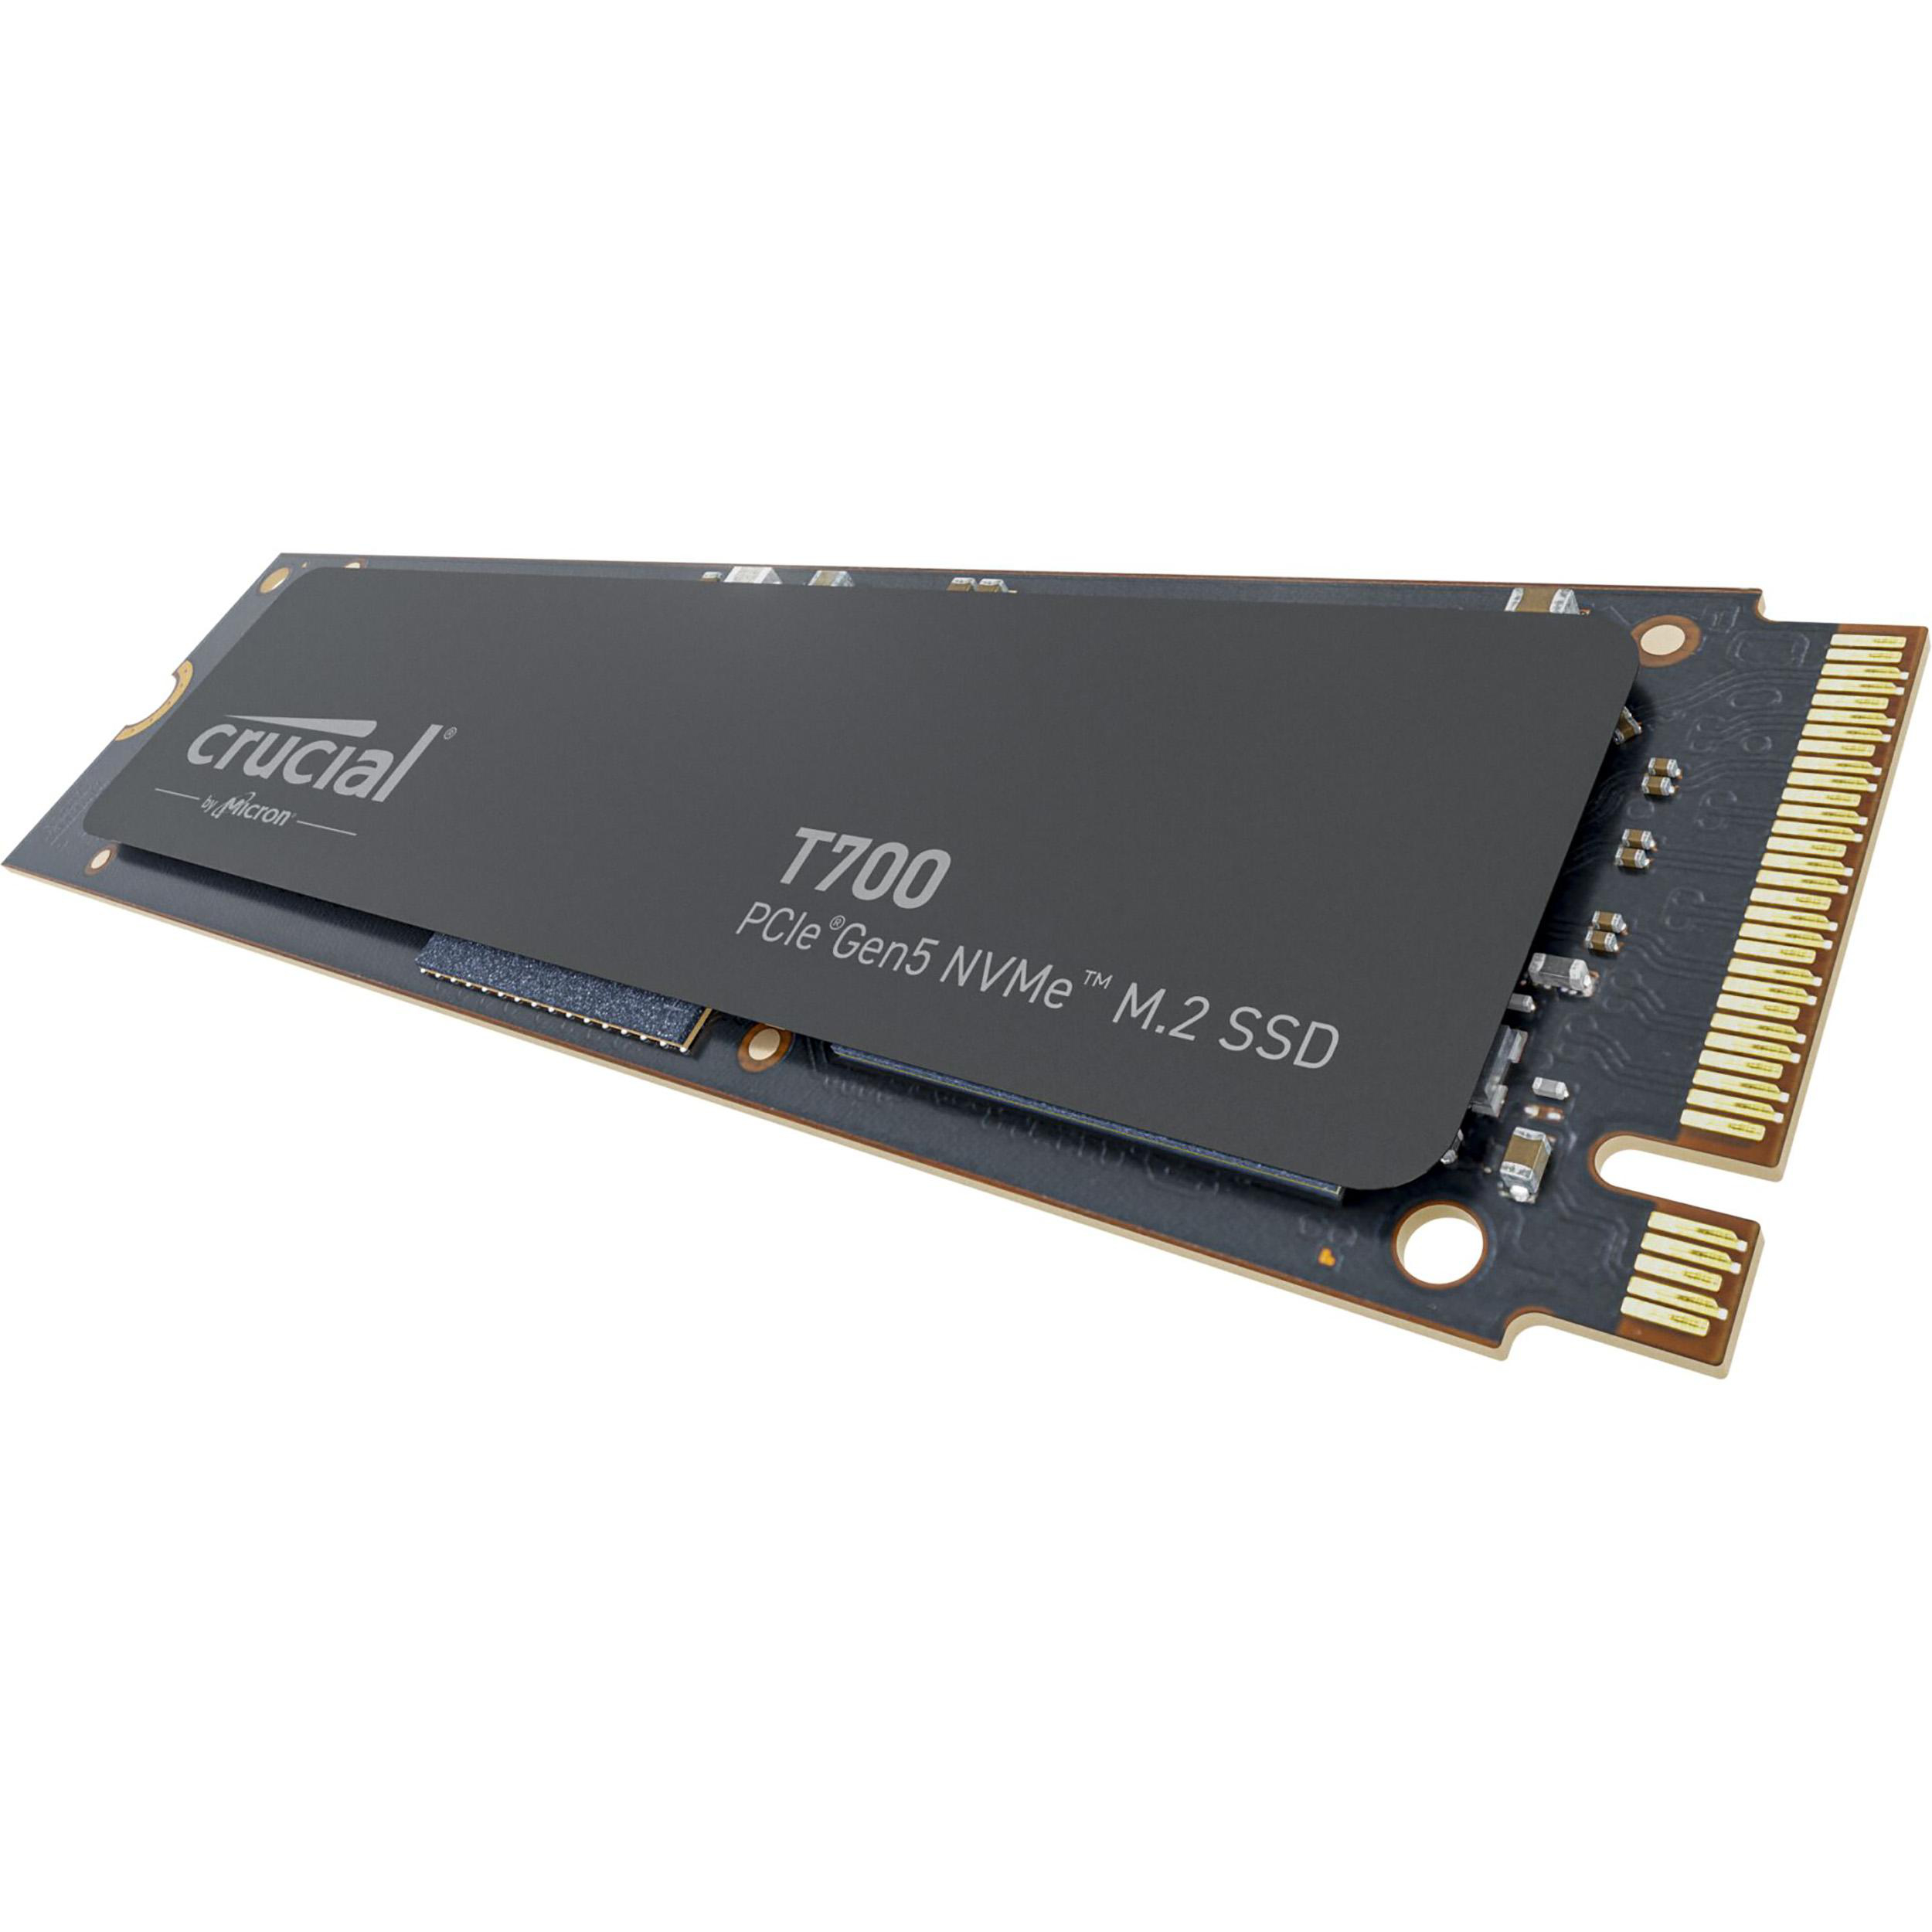 intern T700 SSD, Gen5 M.2, CRUCIAL PCIe NVMe TB 1 SSD